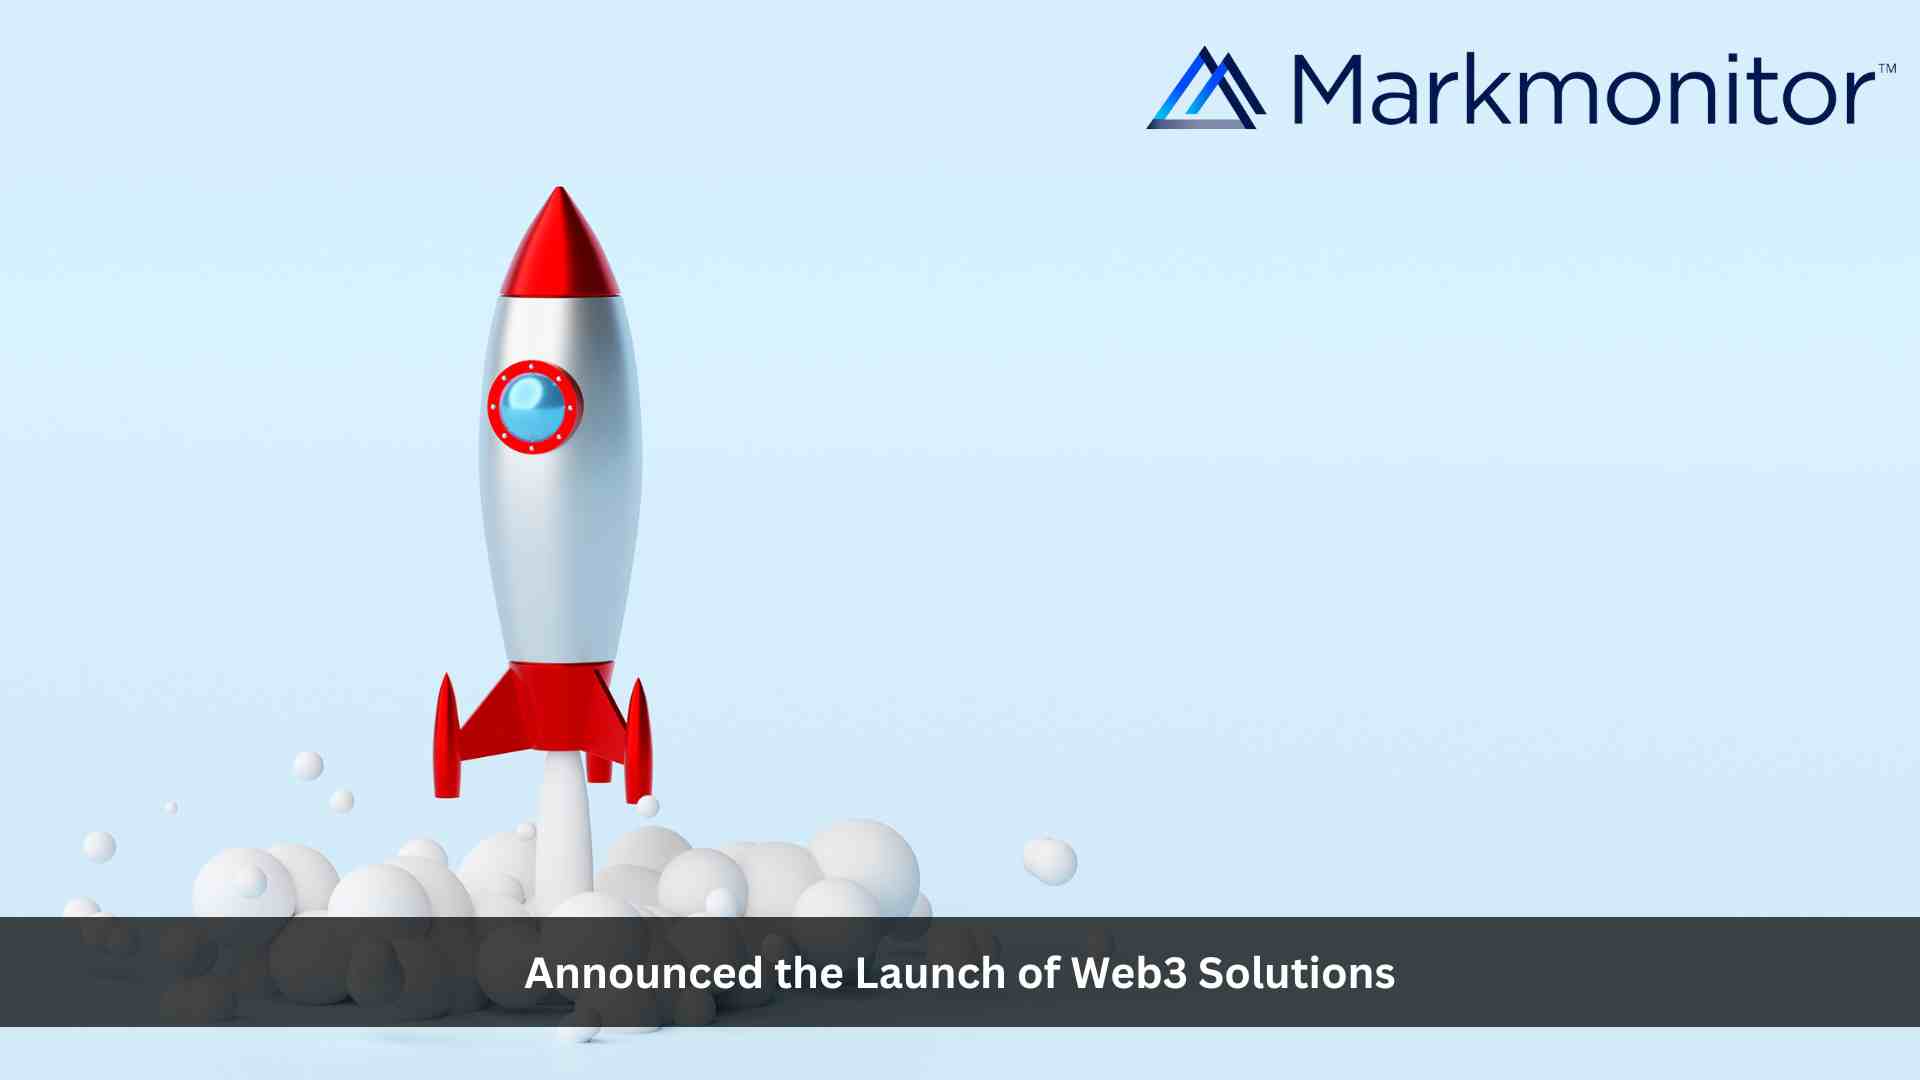 Markmonitor Launches Next-Generation Enterprise Web3 Solutions